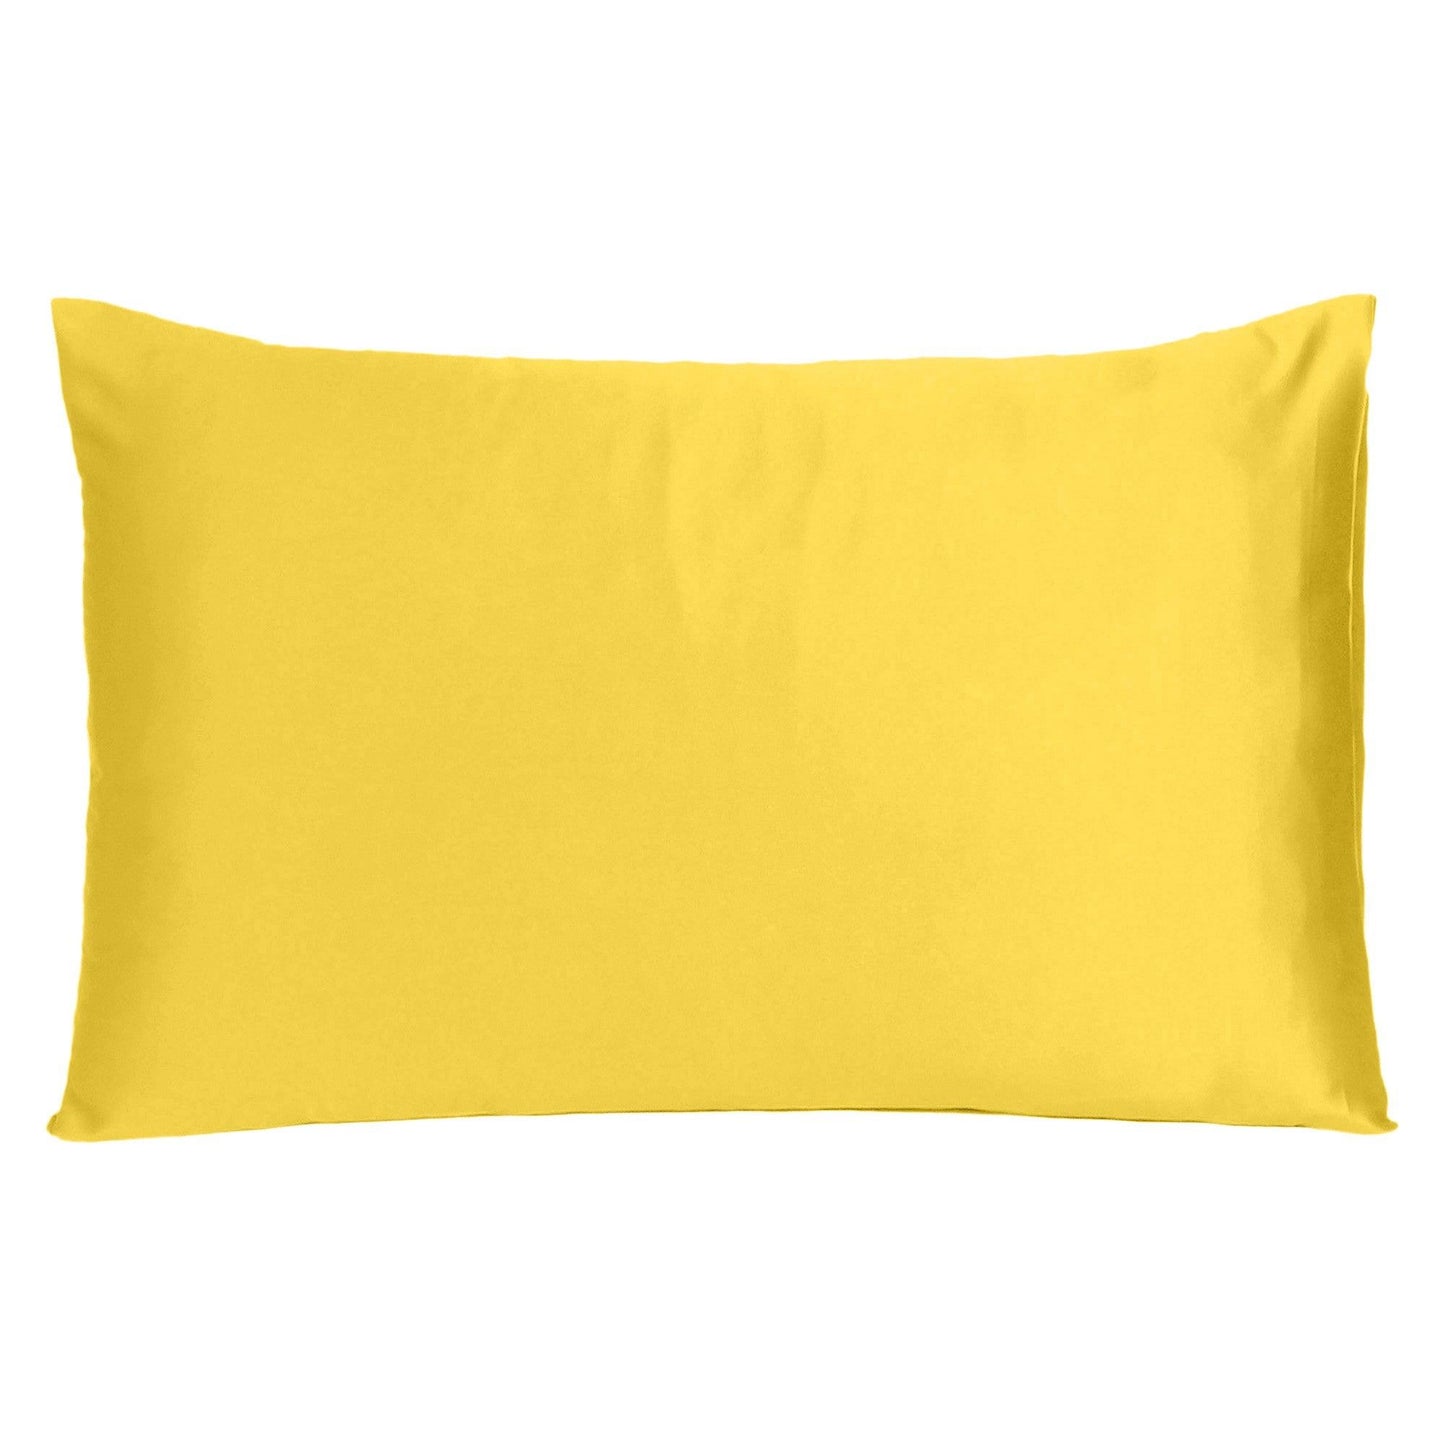 Lemon Dreamy Set Of 2 Silky Satin Standard Pillowcases - FurniFindUSA